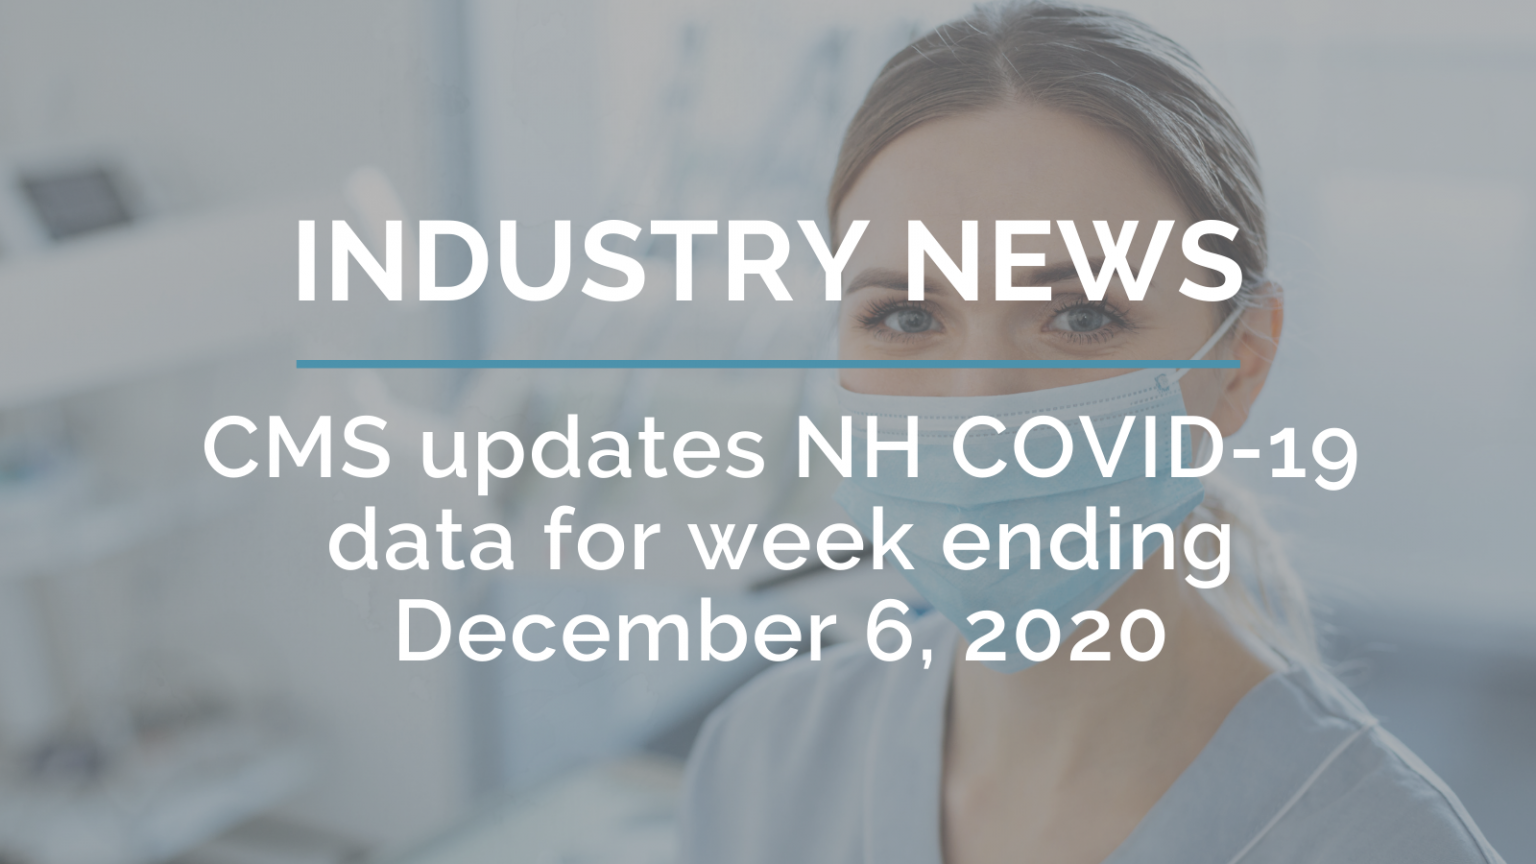 CMS updates nursing home COVID19 data week ending December 6, 2020